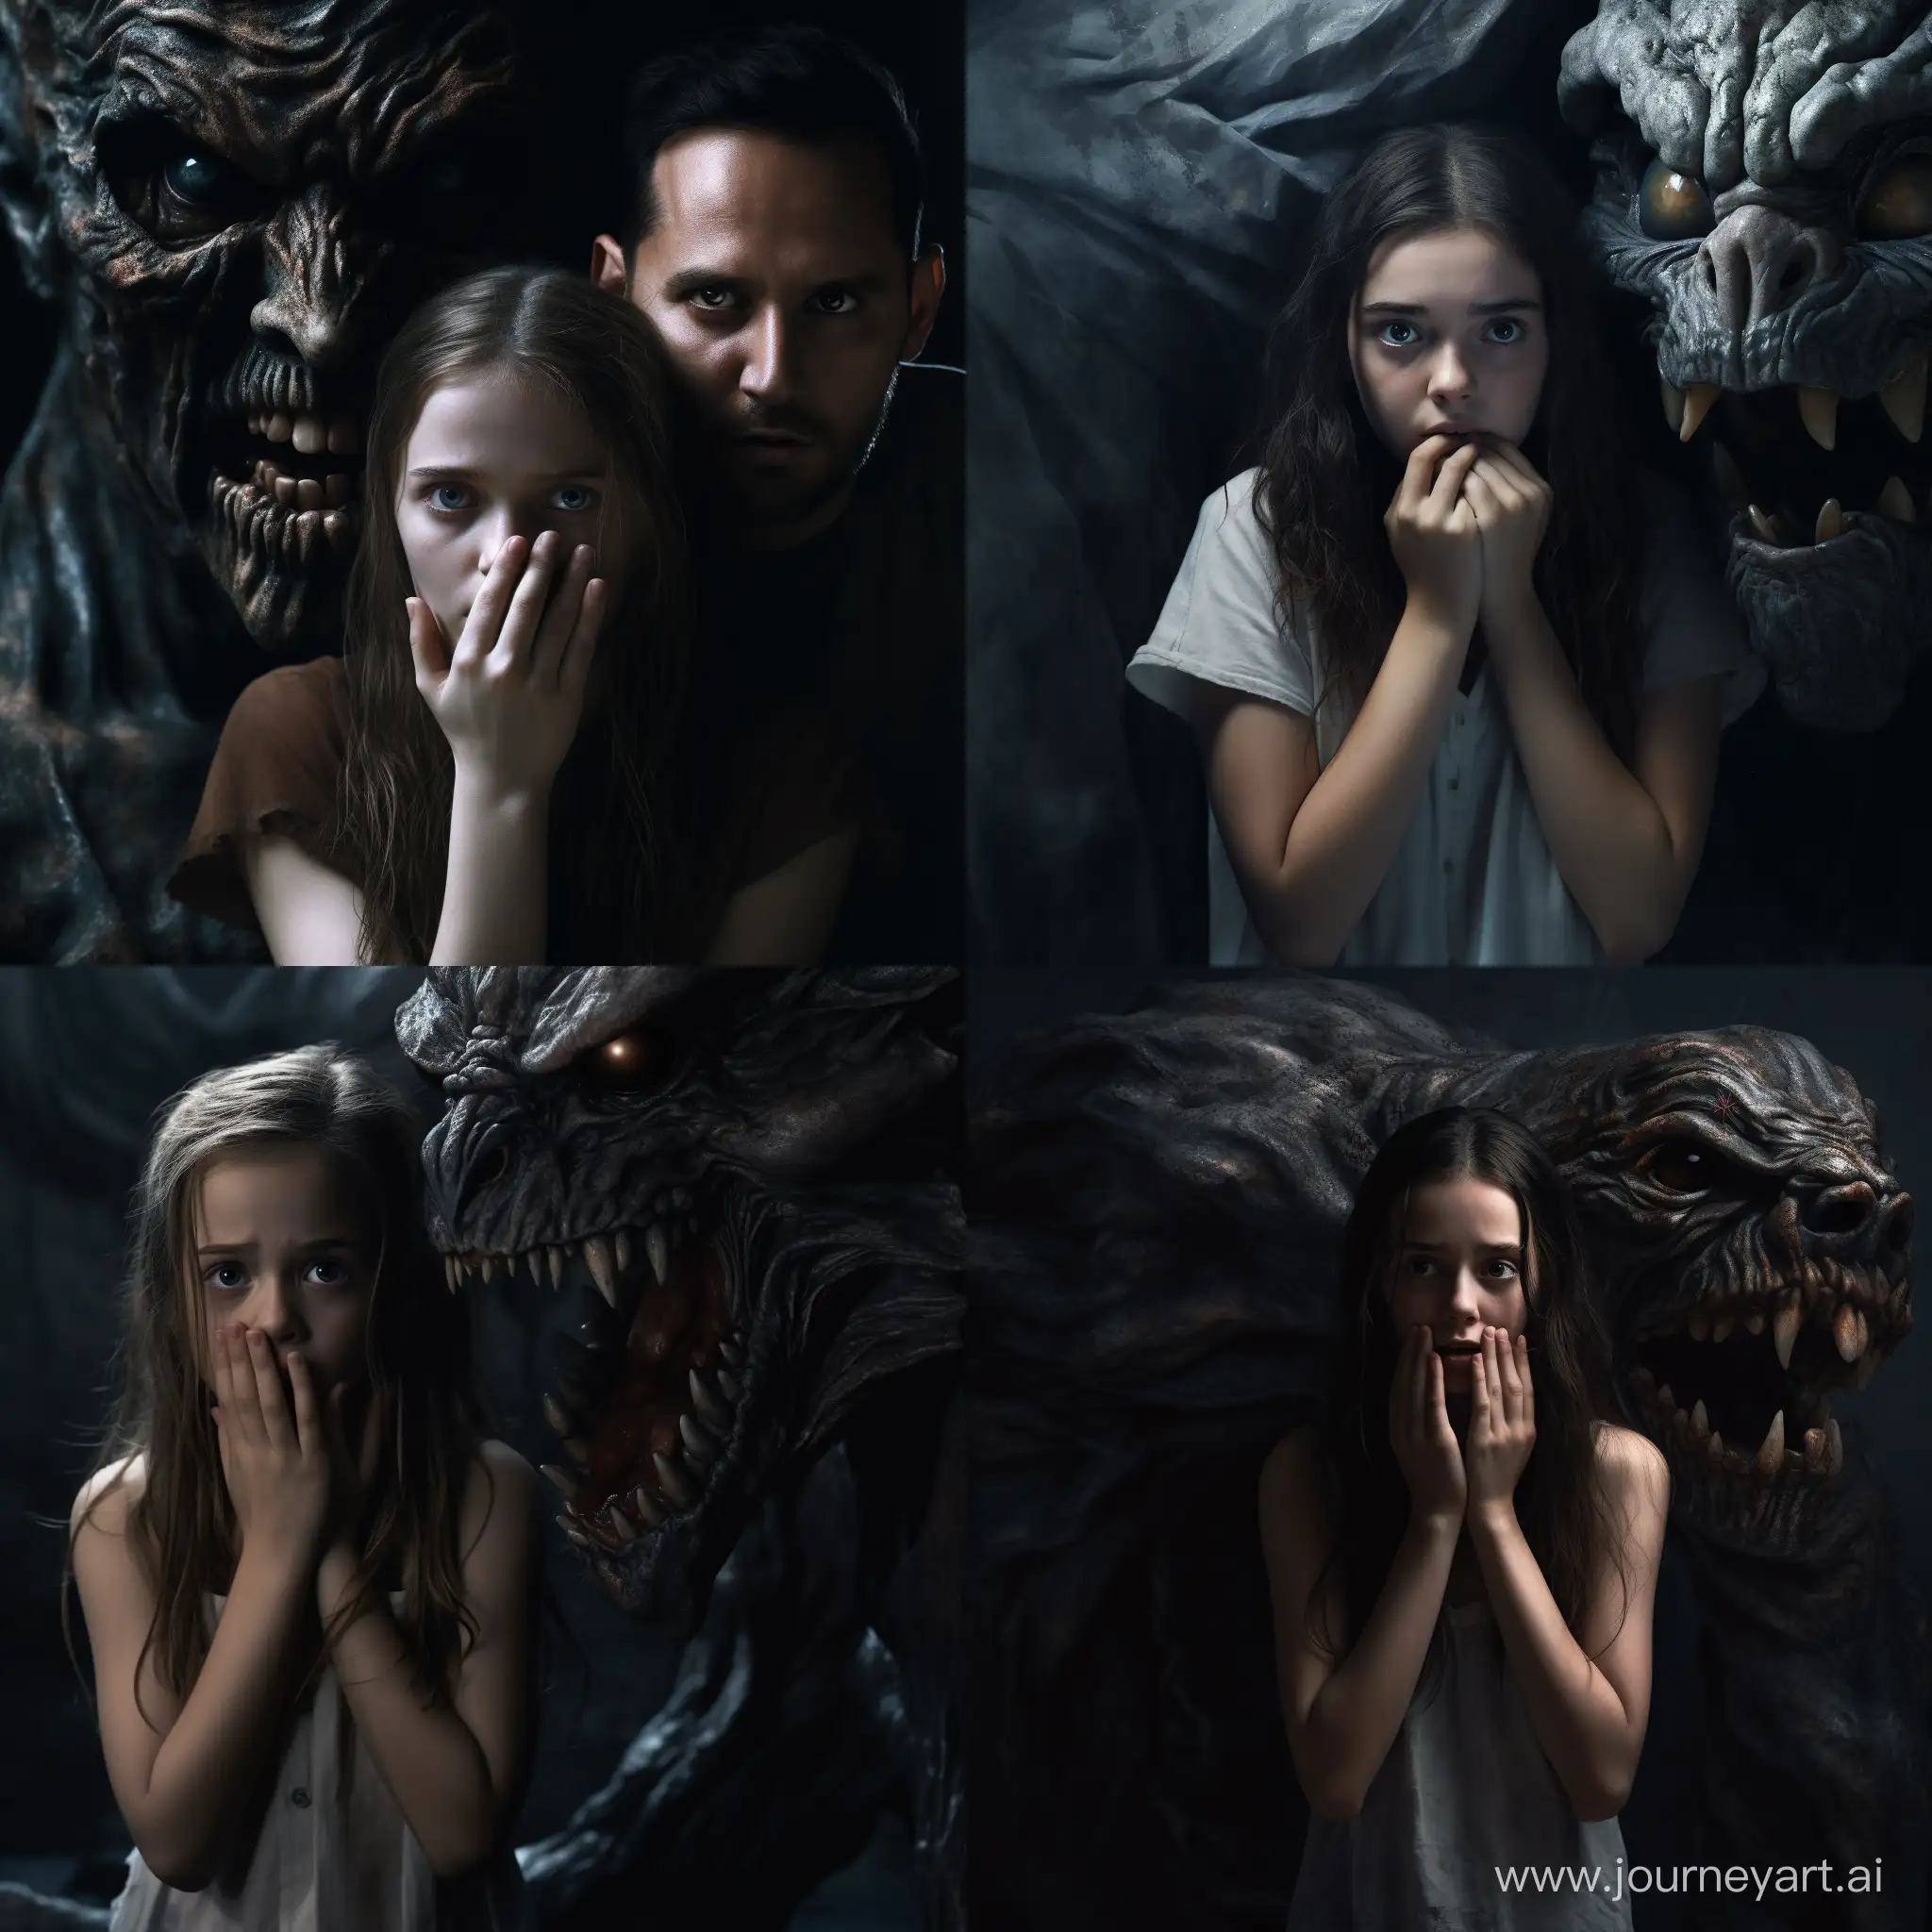 Frightened-Girl-Confronts-Terrifying-Monster-in-HyperRealistic-8K-Image